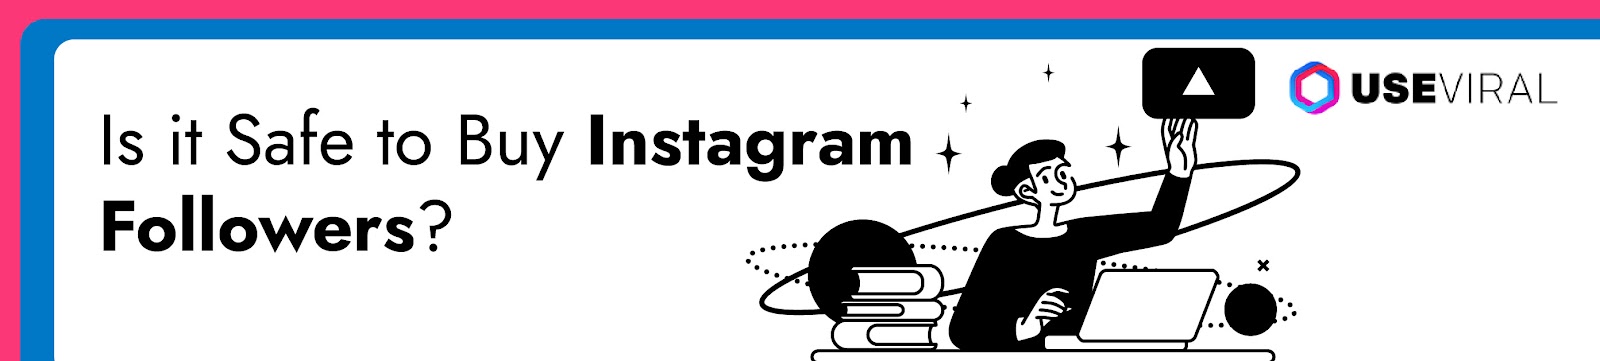 Is it Safe to Buy Instagram Followers?